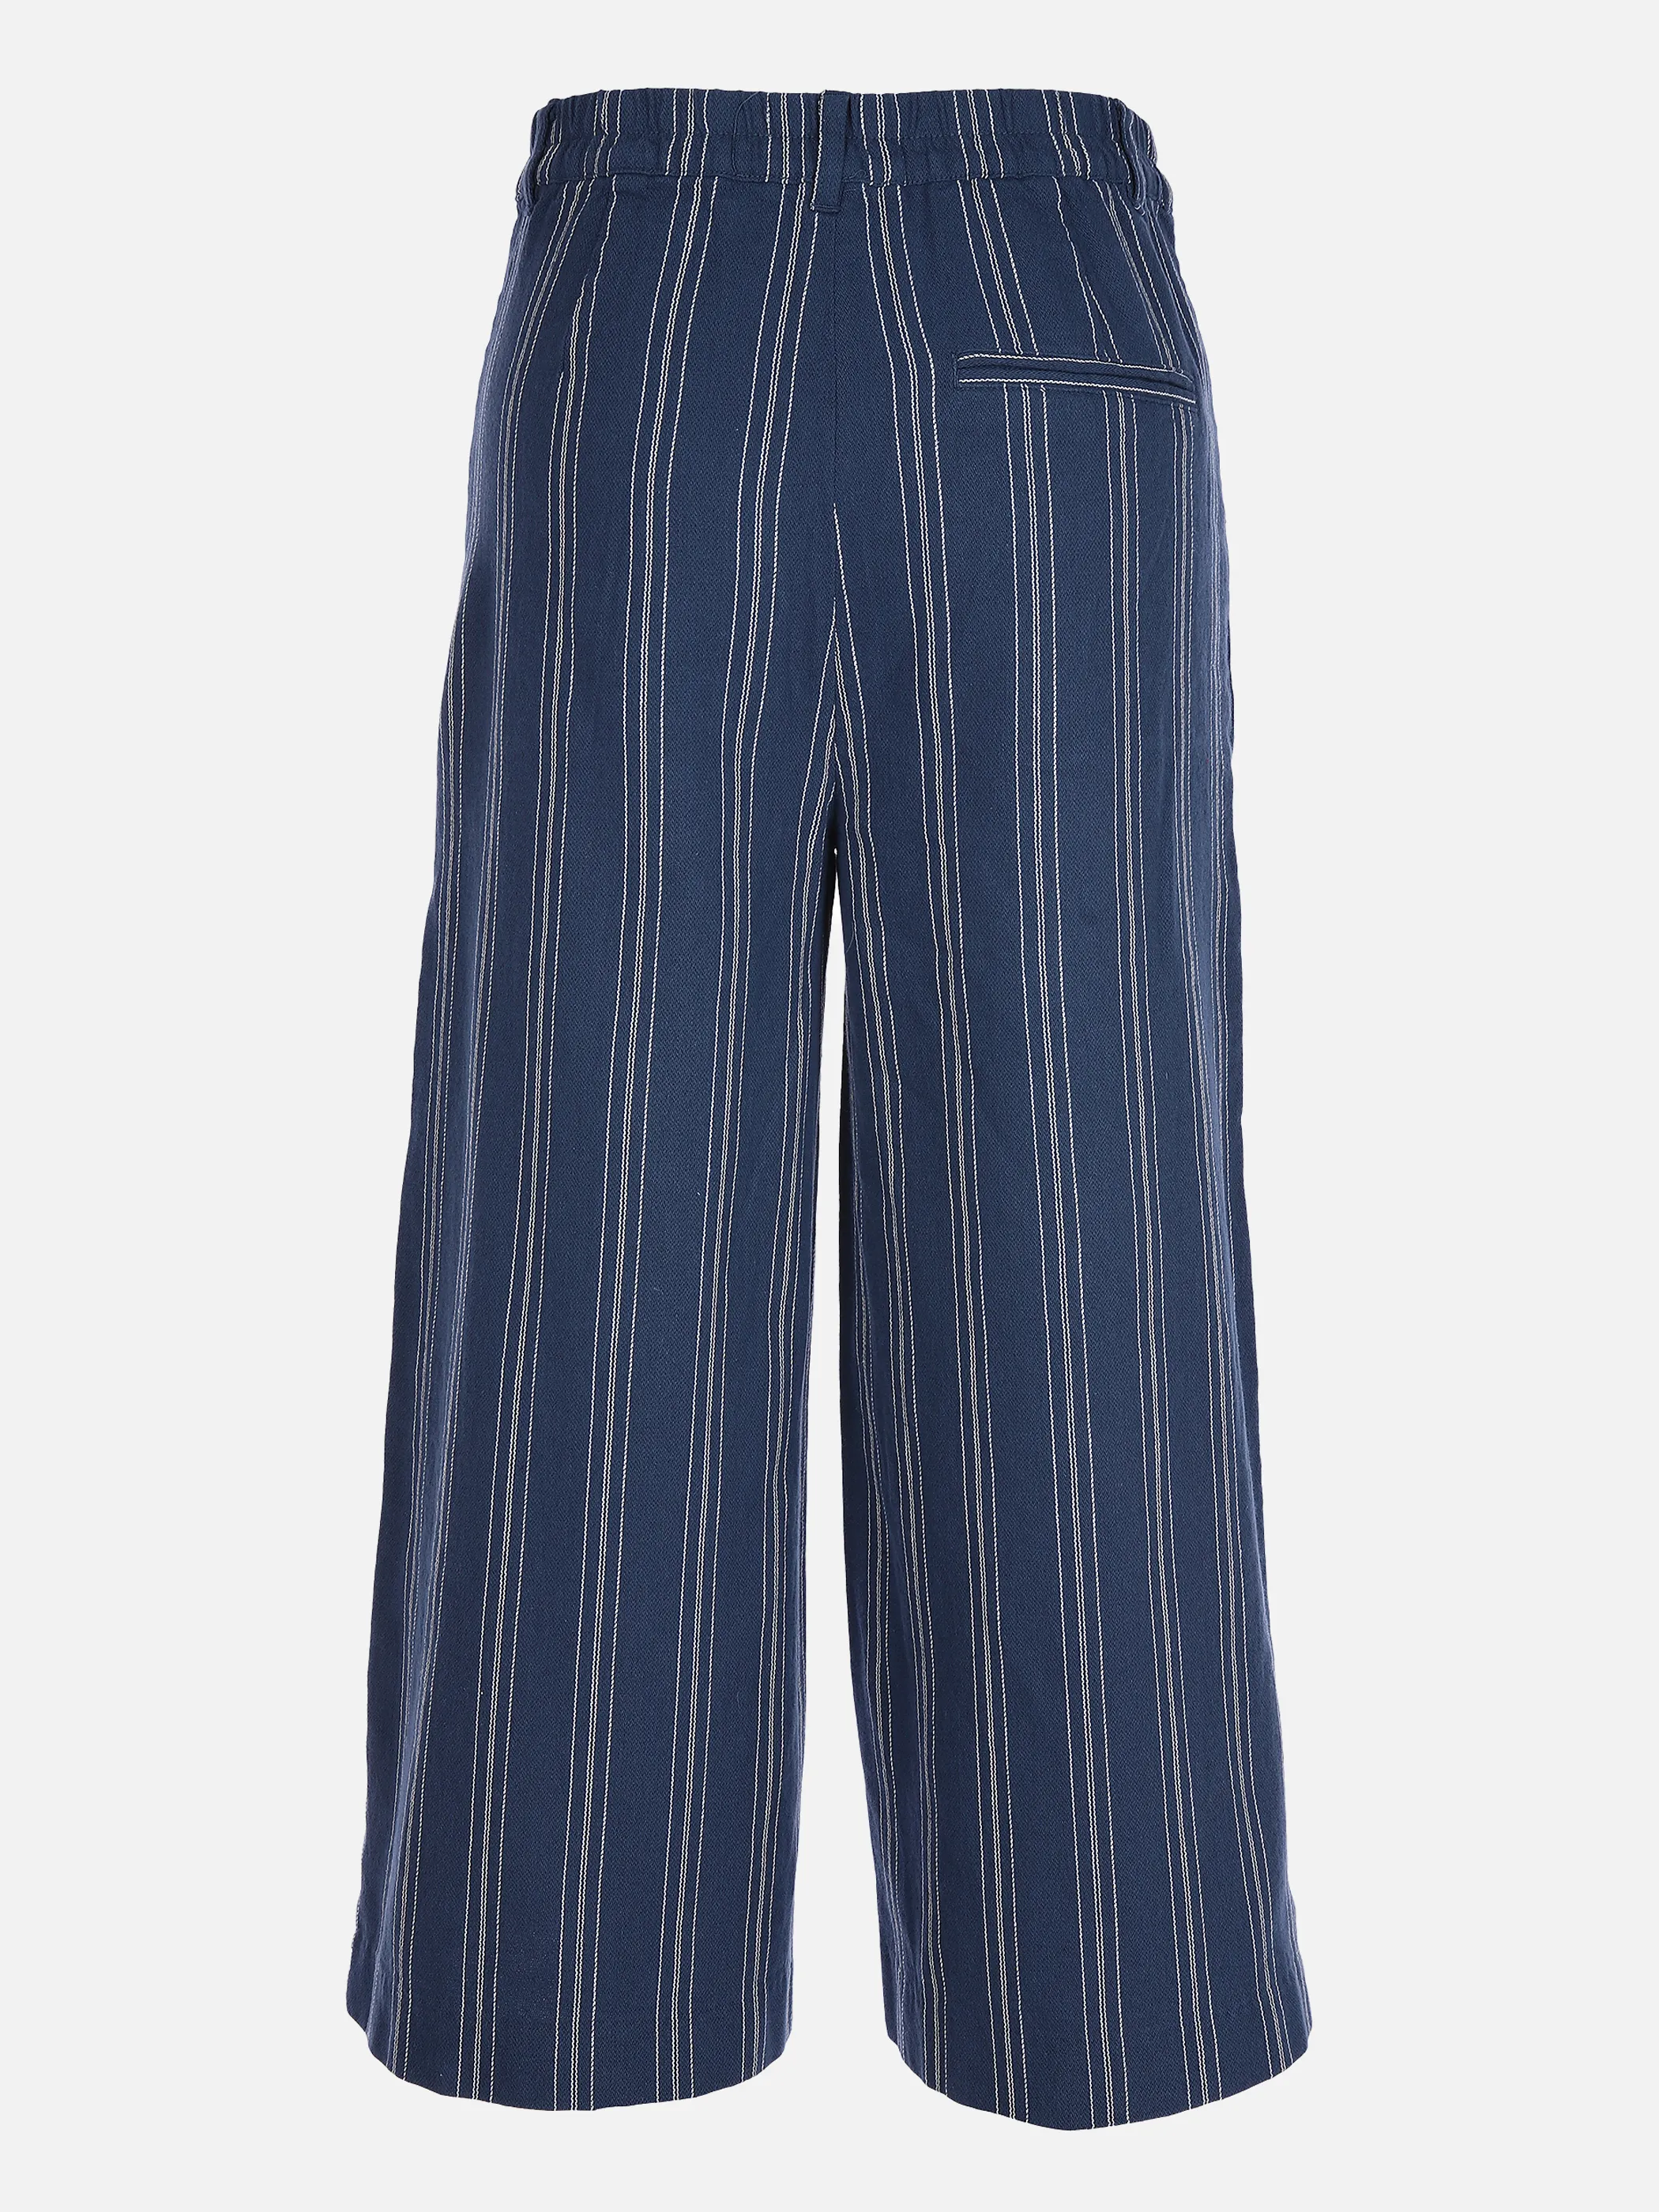 Tom Tailor 1031280 pants culotte striped Blau 865225 29534 2